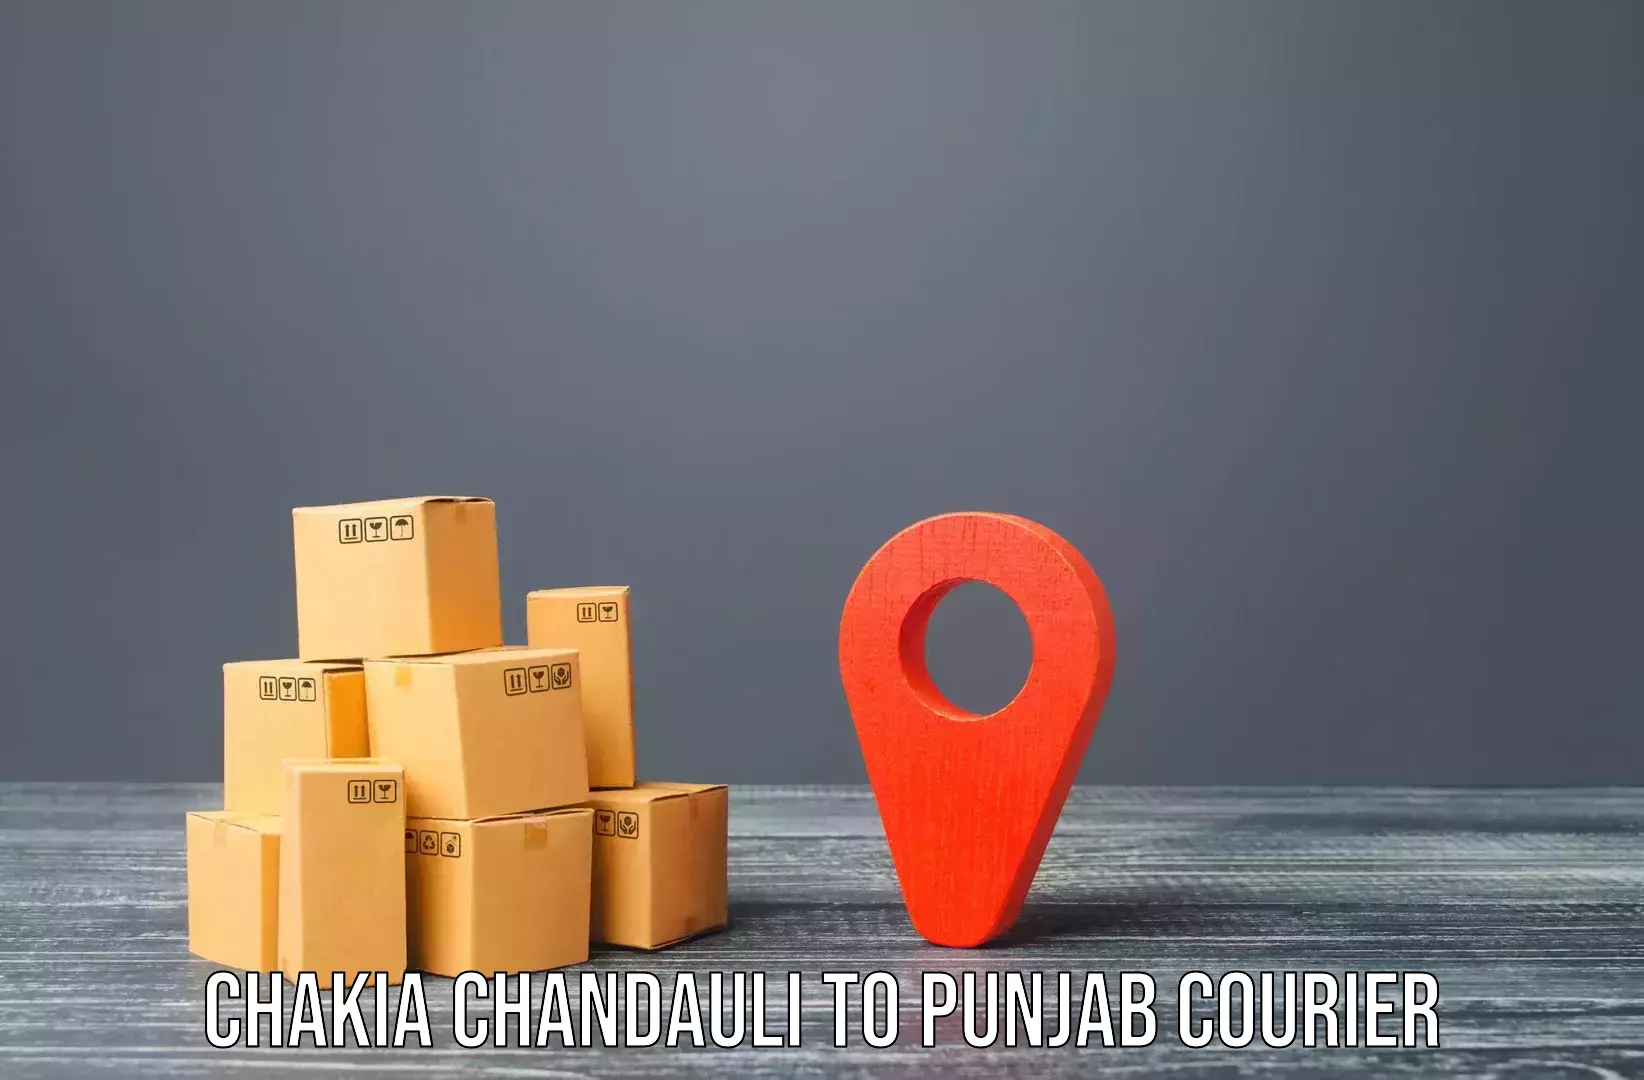 Professional moving company Chakia Chandauli to Begowal